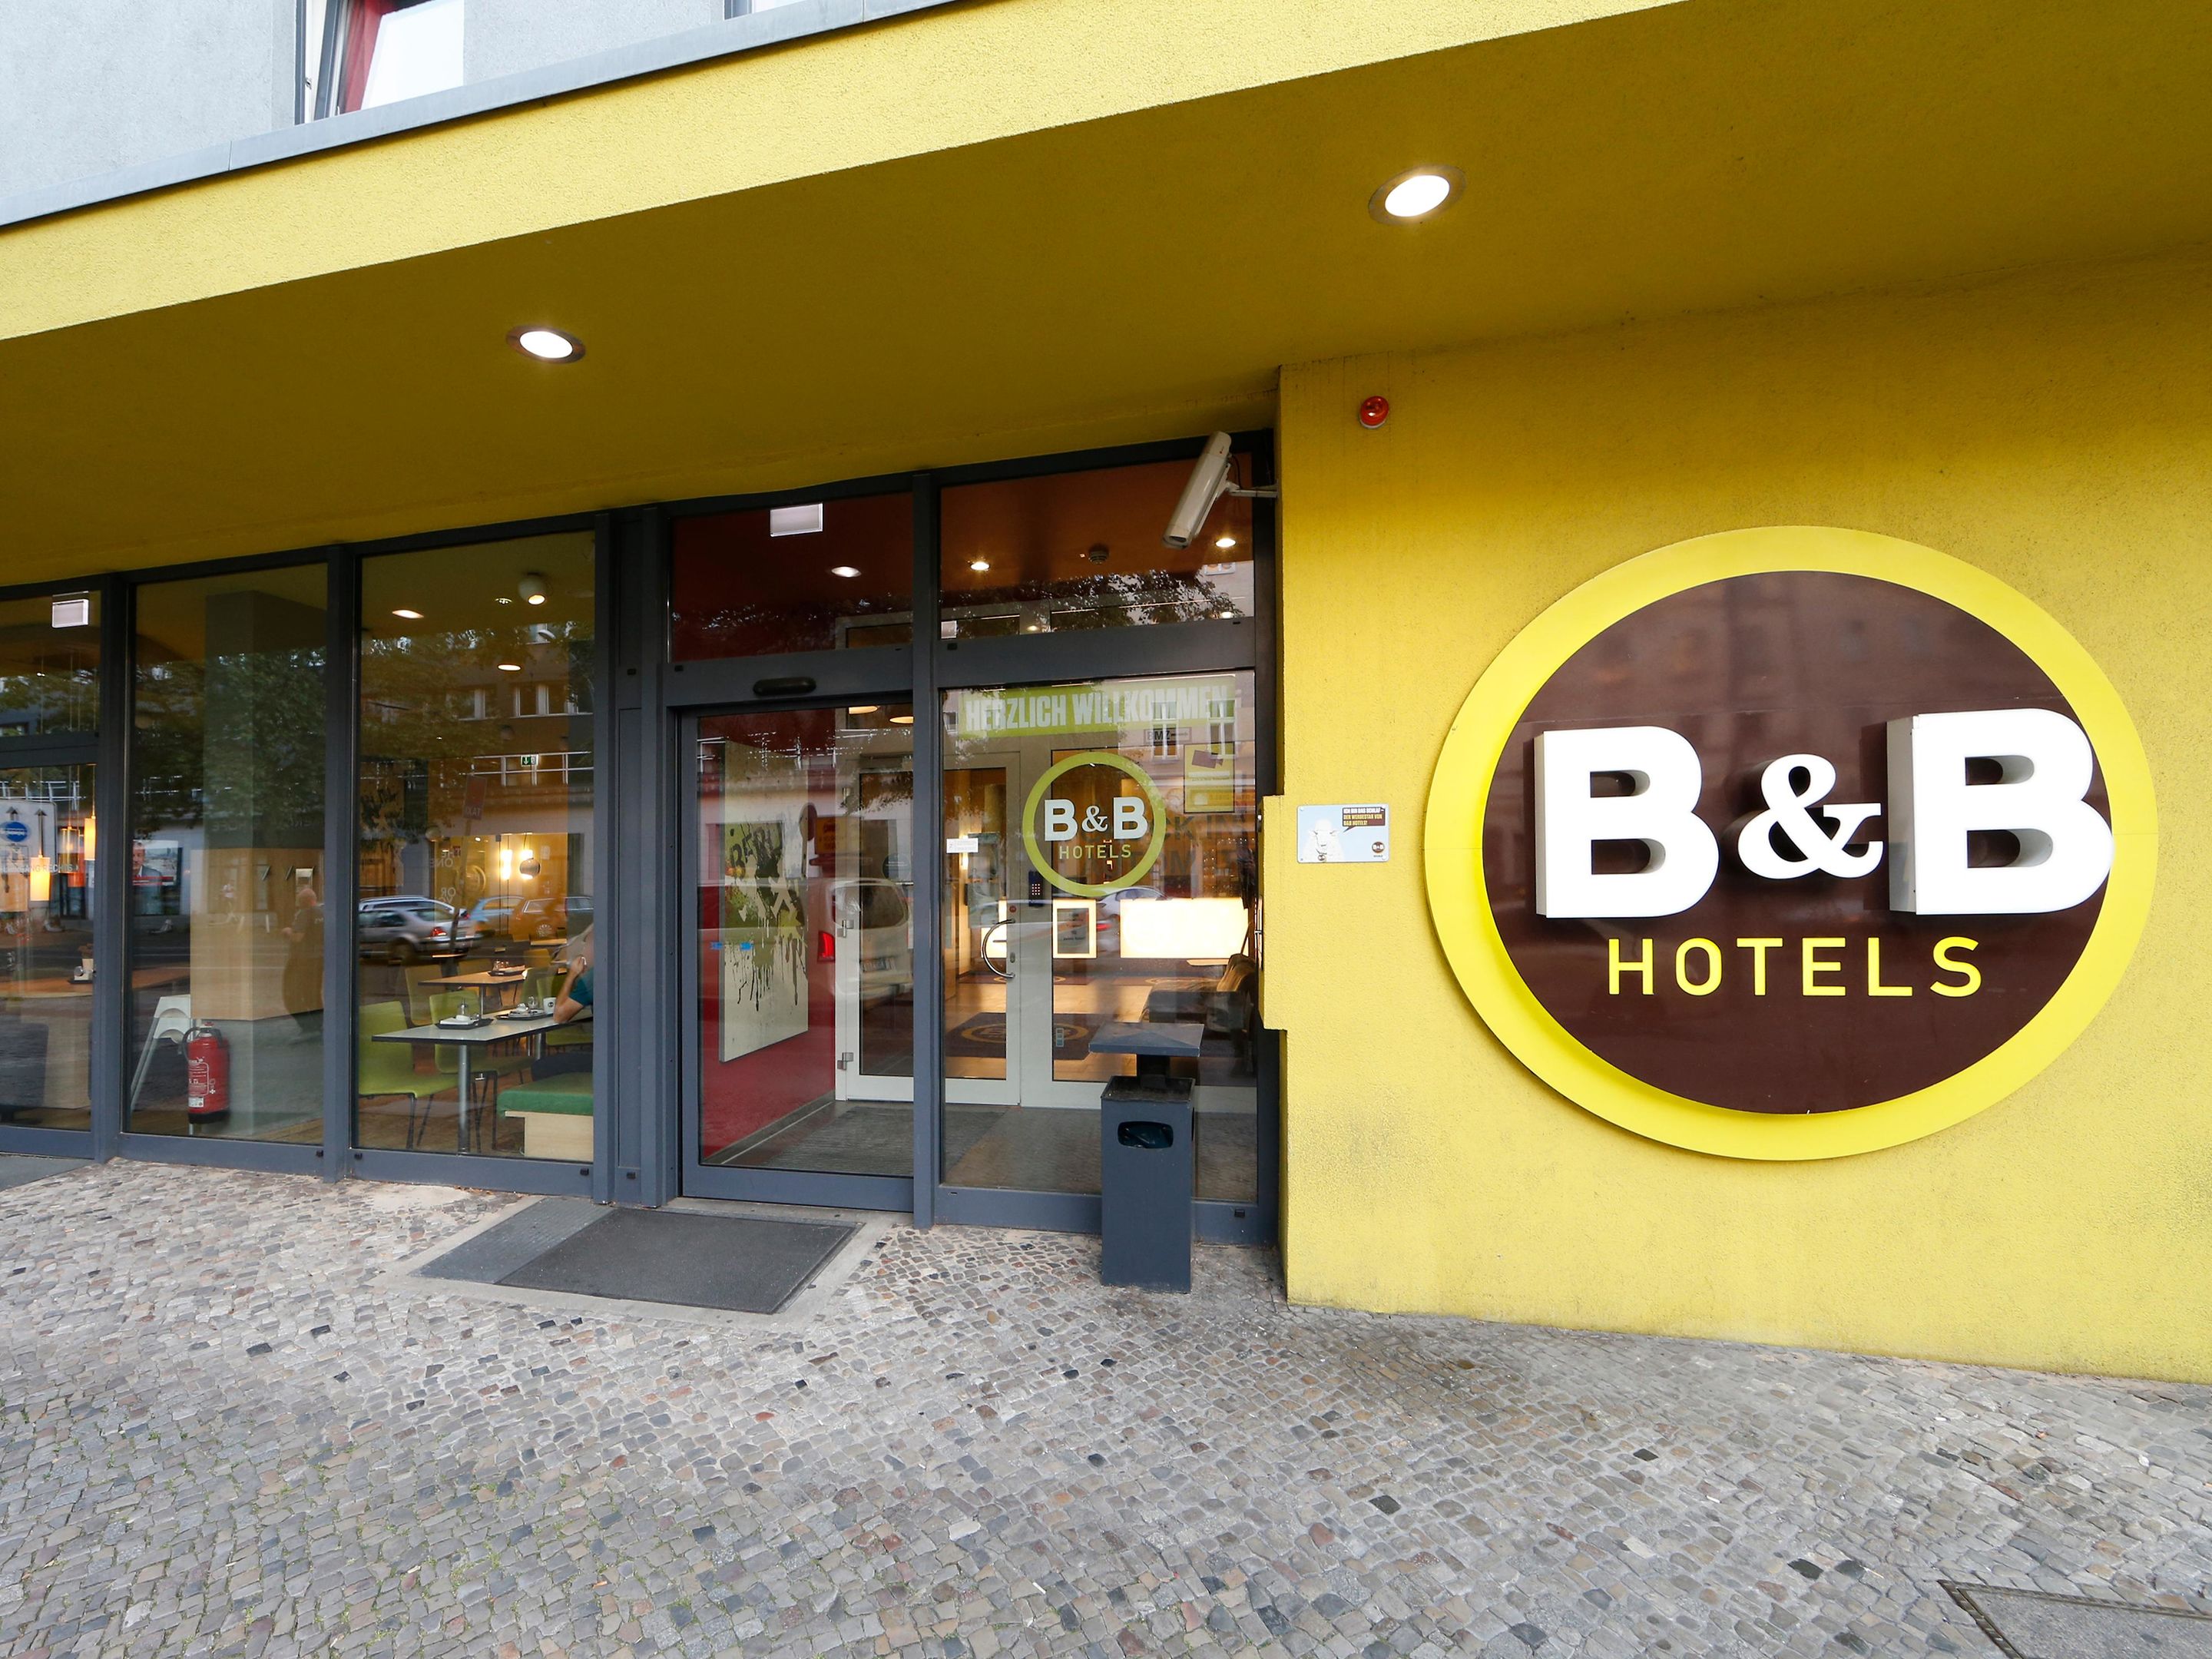 B&B HOTEL Berlin-Potsdamer Platz, Potsdamer Straße 90 in Berlin